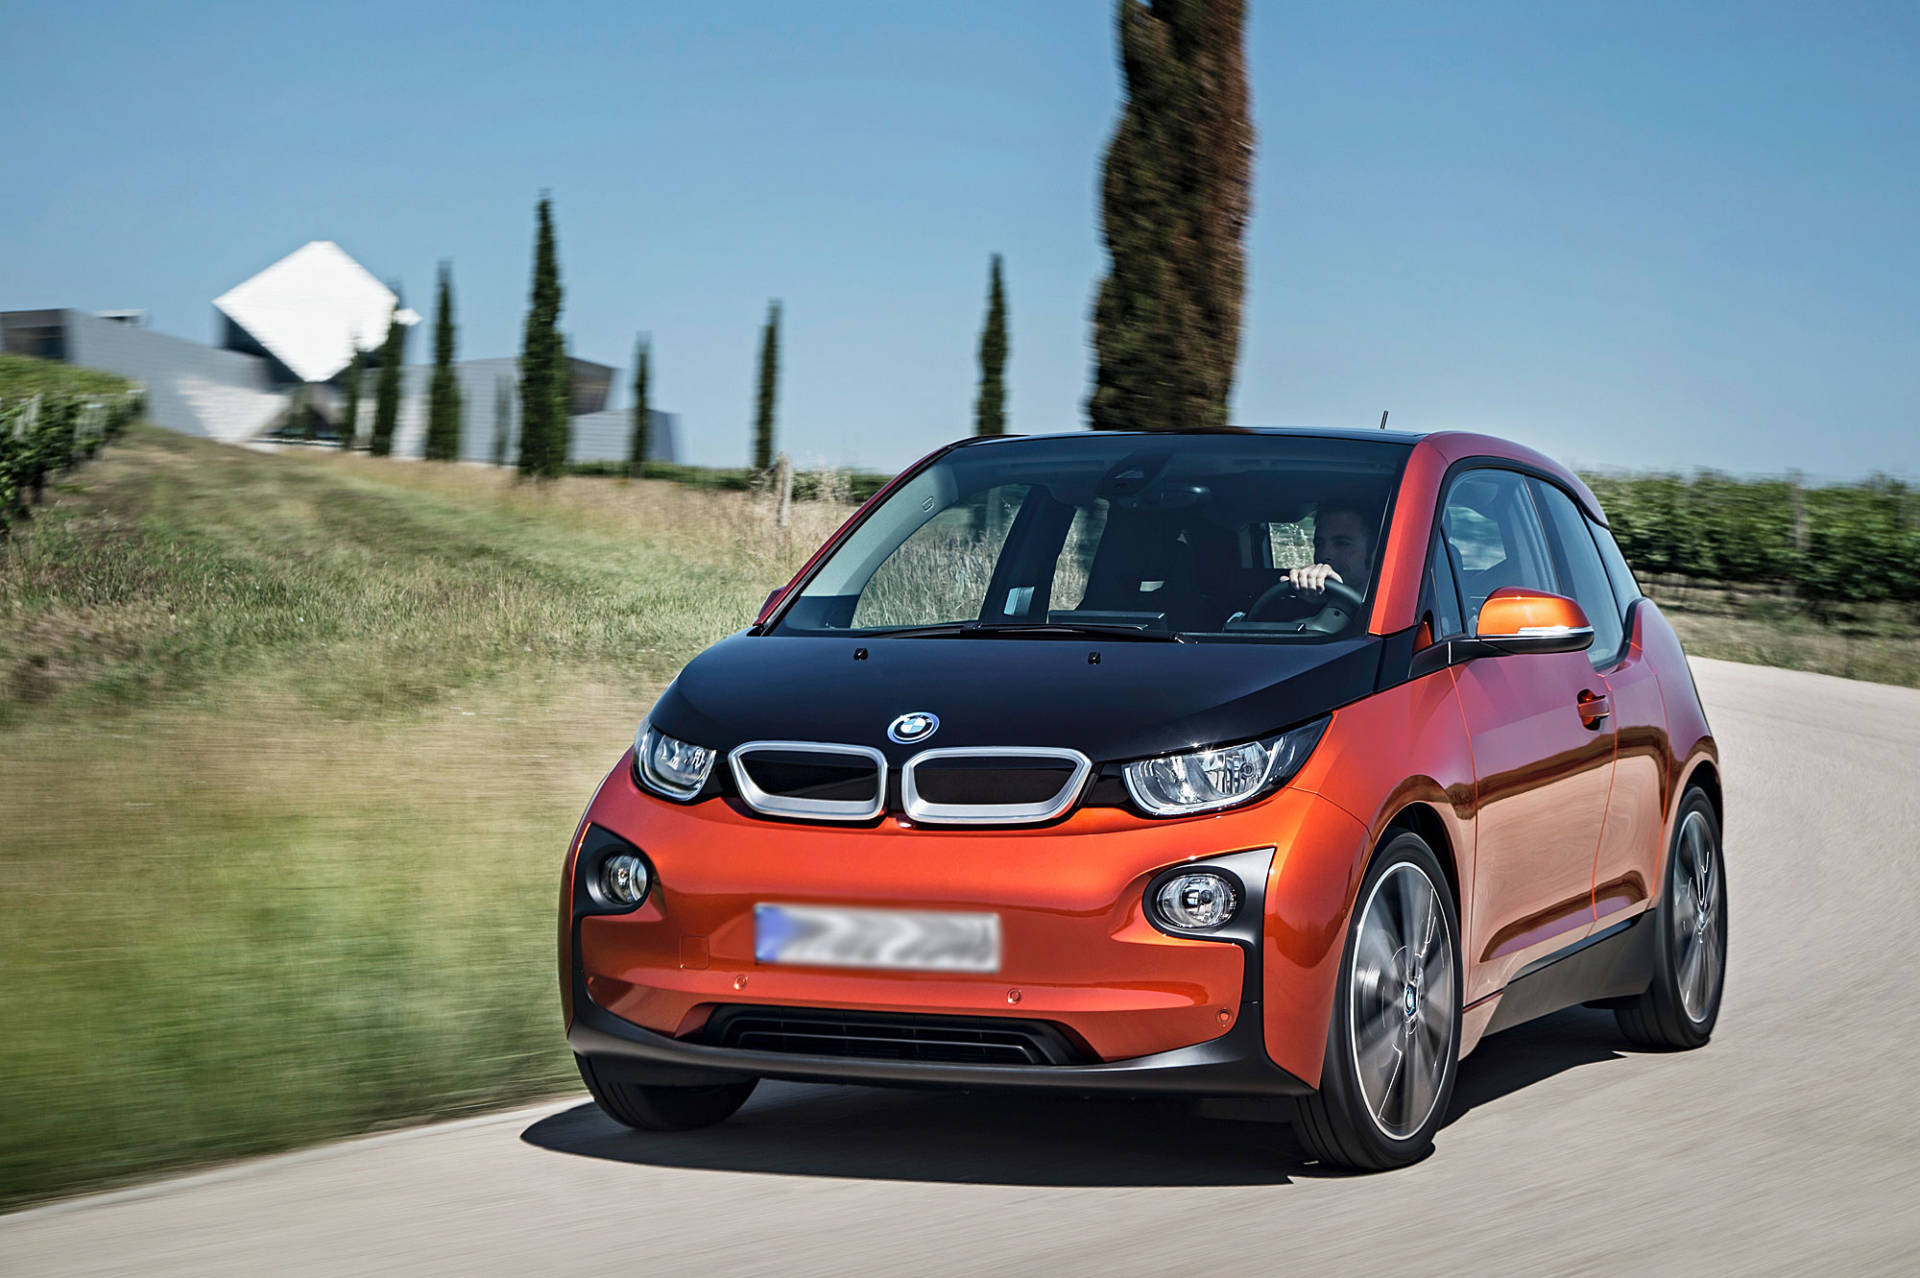 E-Auto mieten: Testbericht über den roten BMW i3